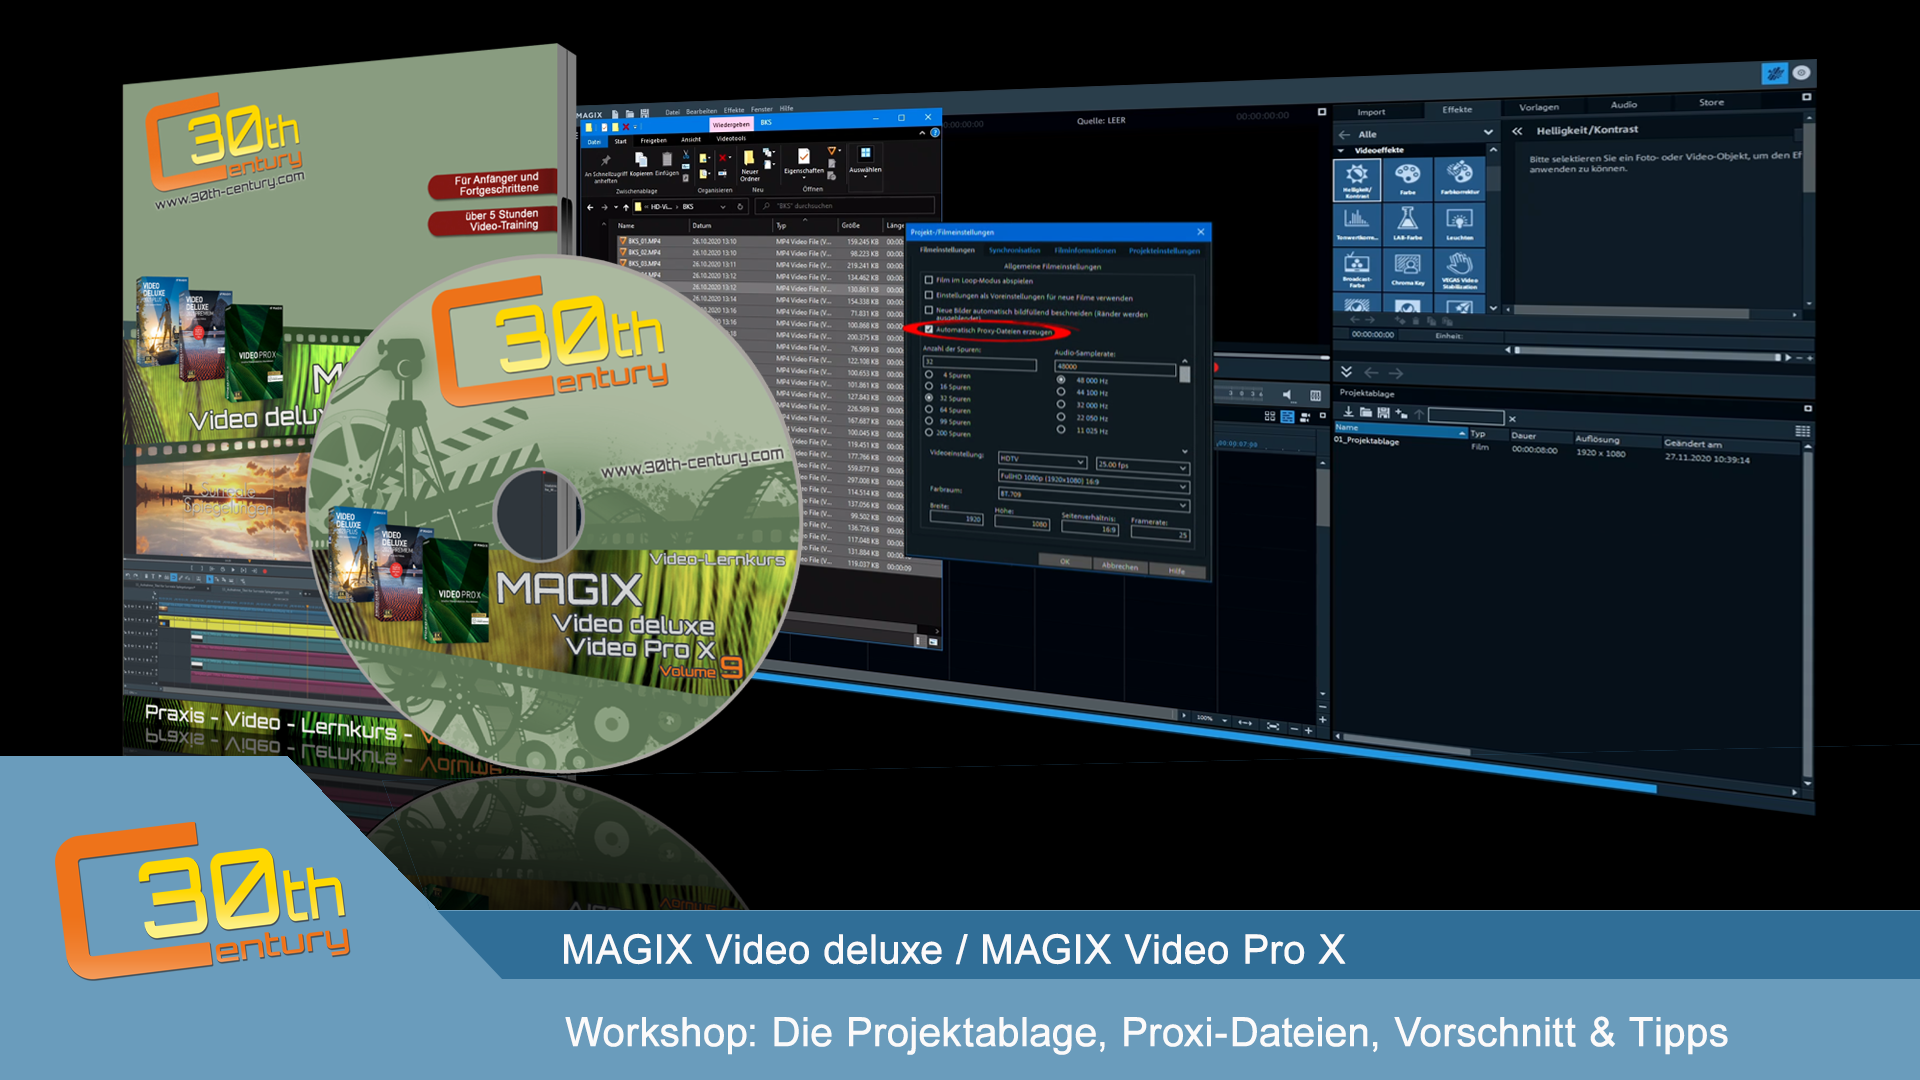 instal the new for windows MAGIX Video Pro X15 v21.0.1.198